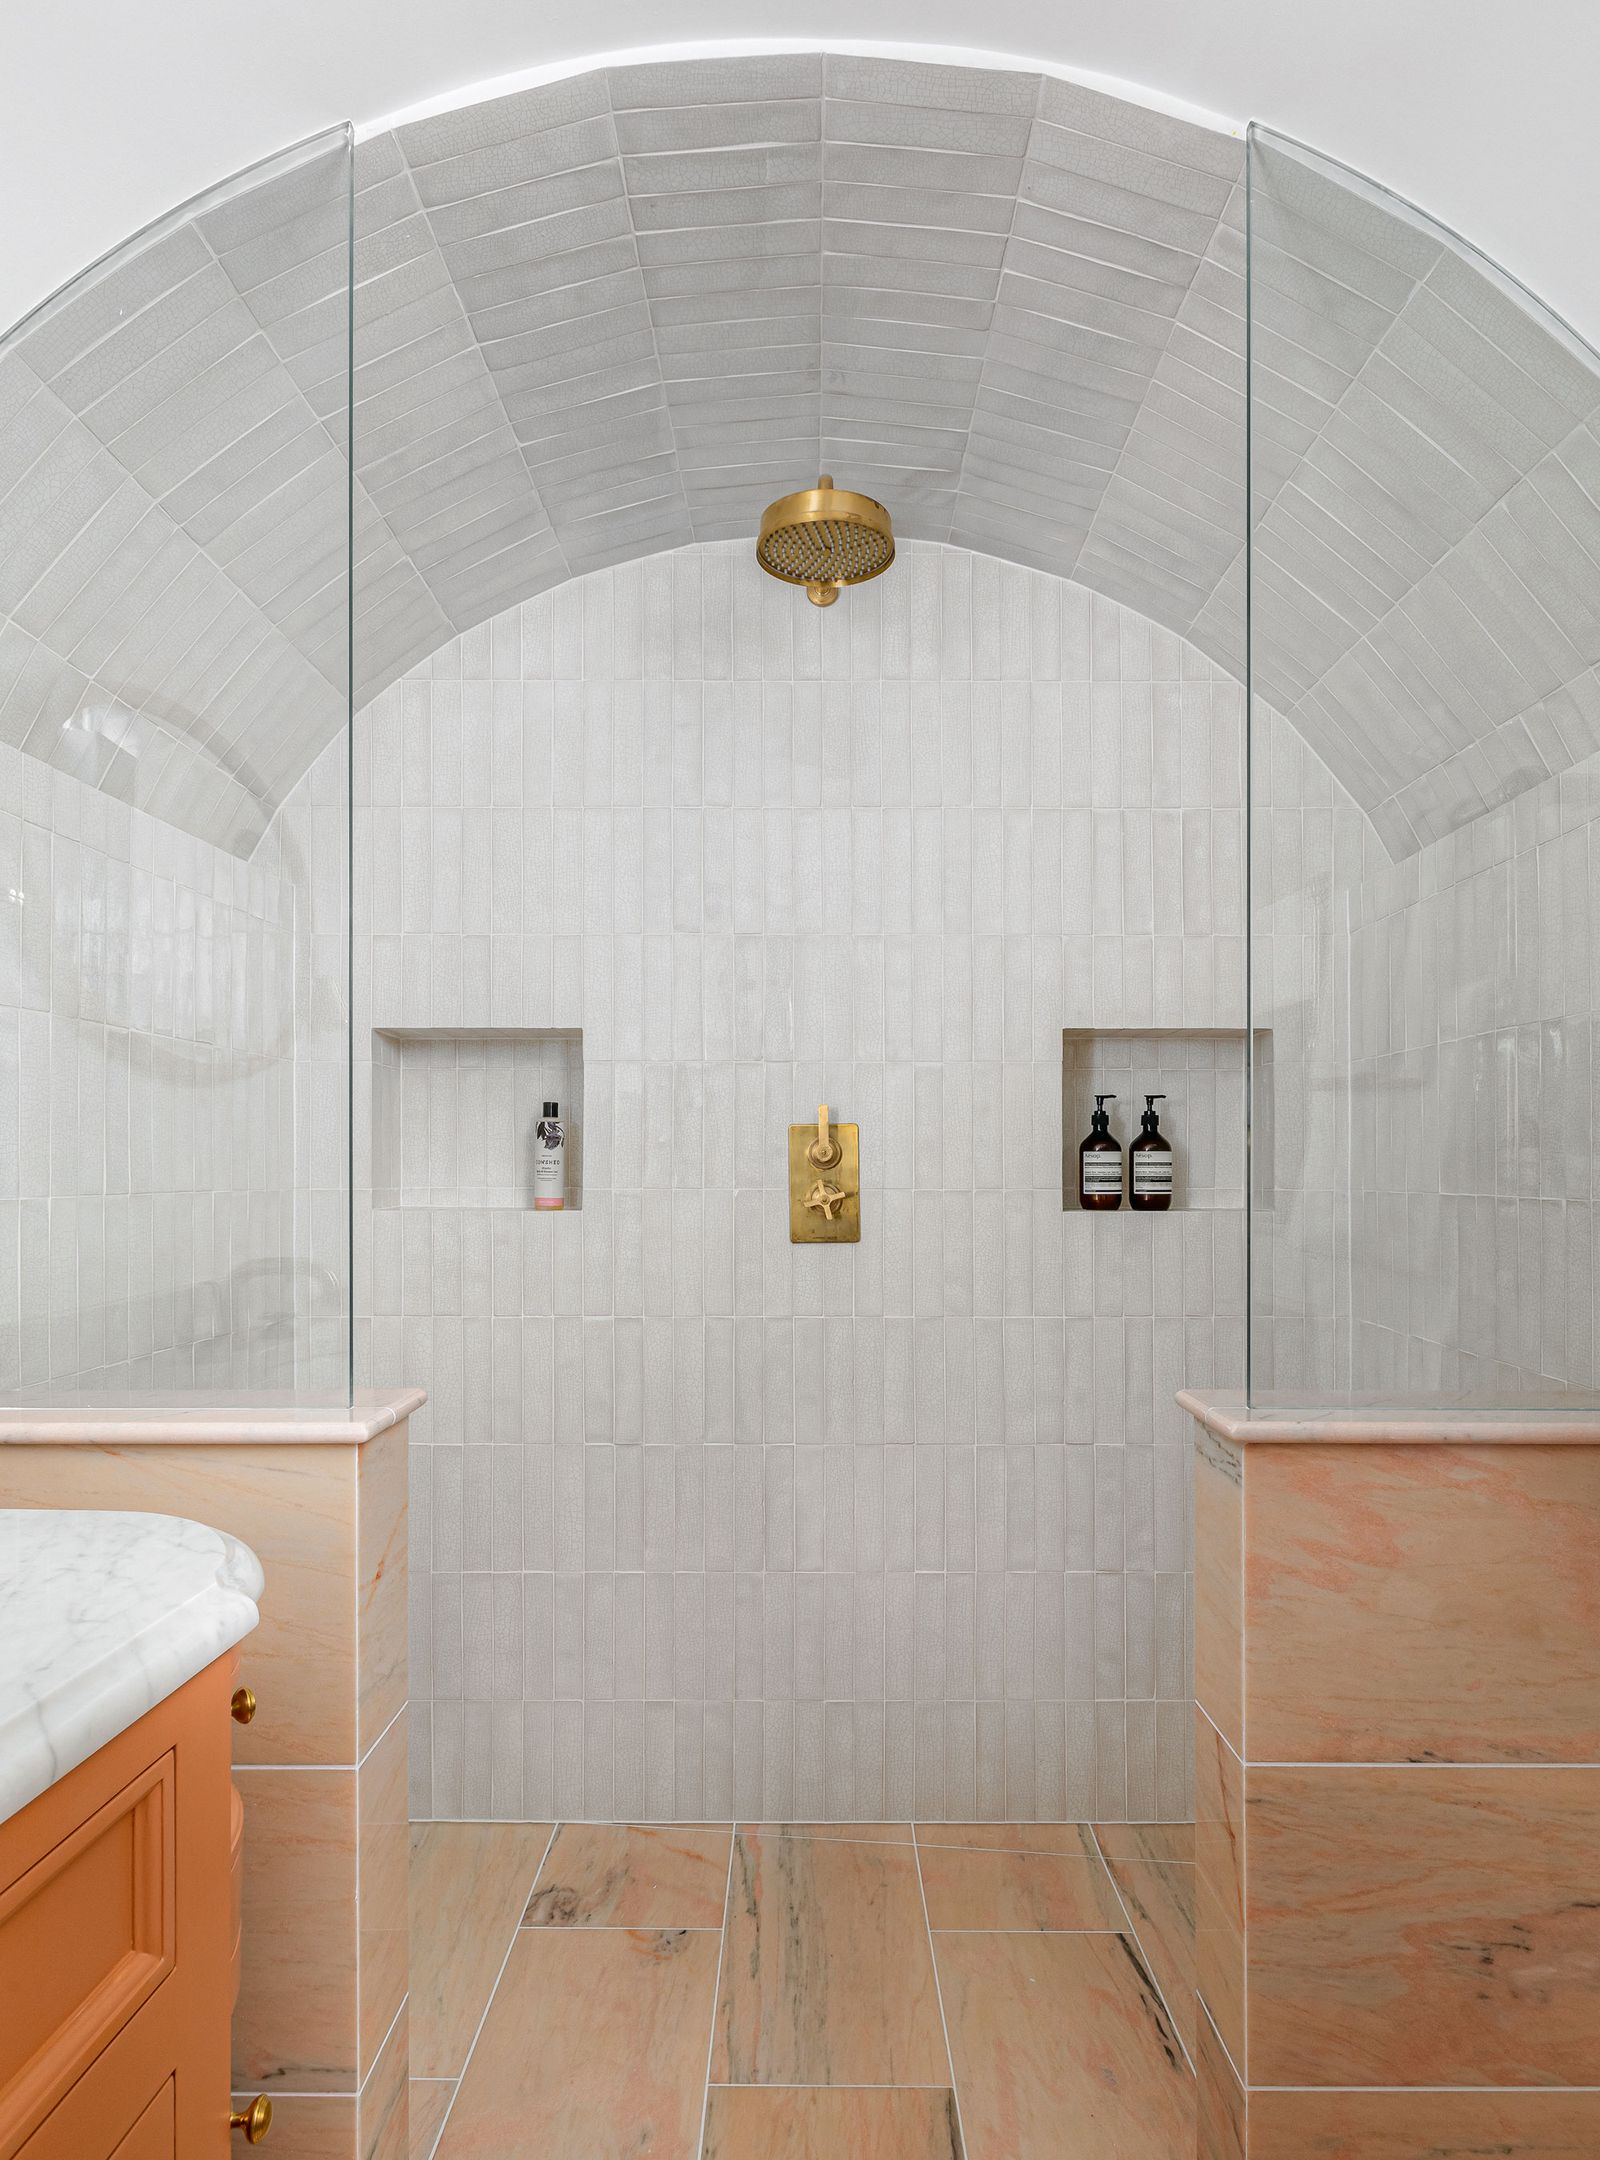 Wellness bathroom ideas: 9 elegant spaces to inspire rest